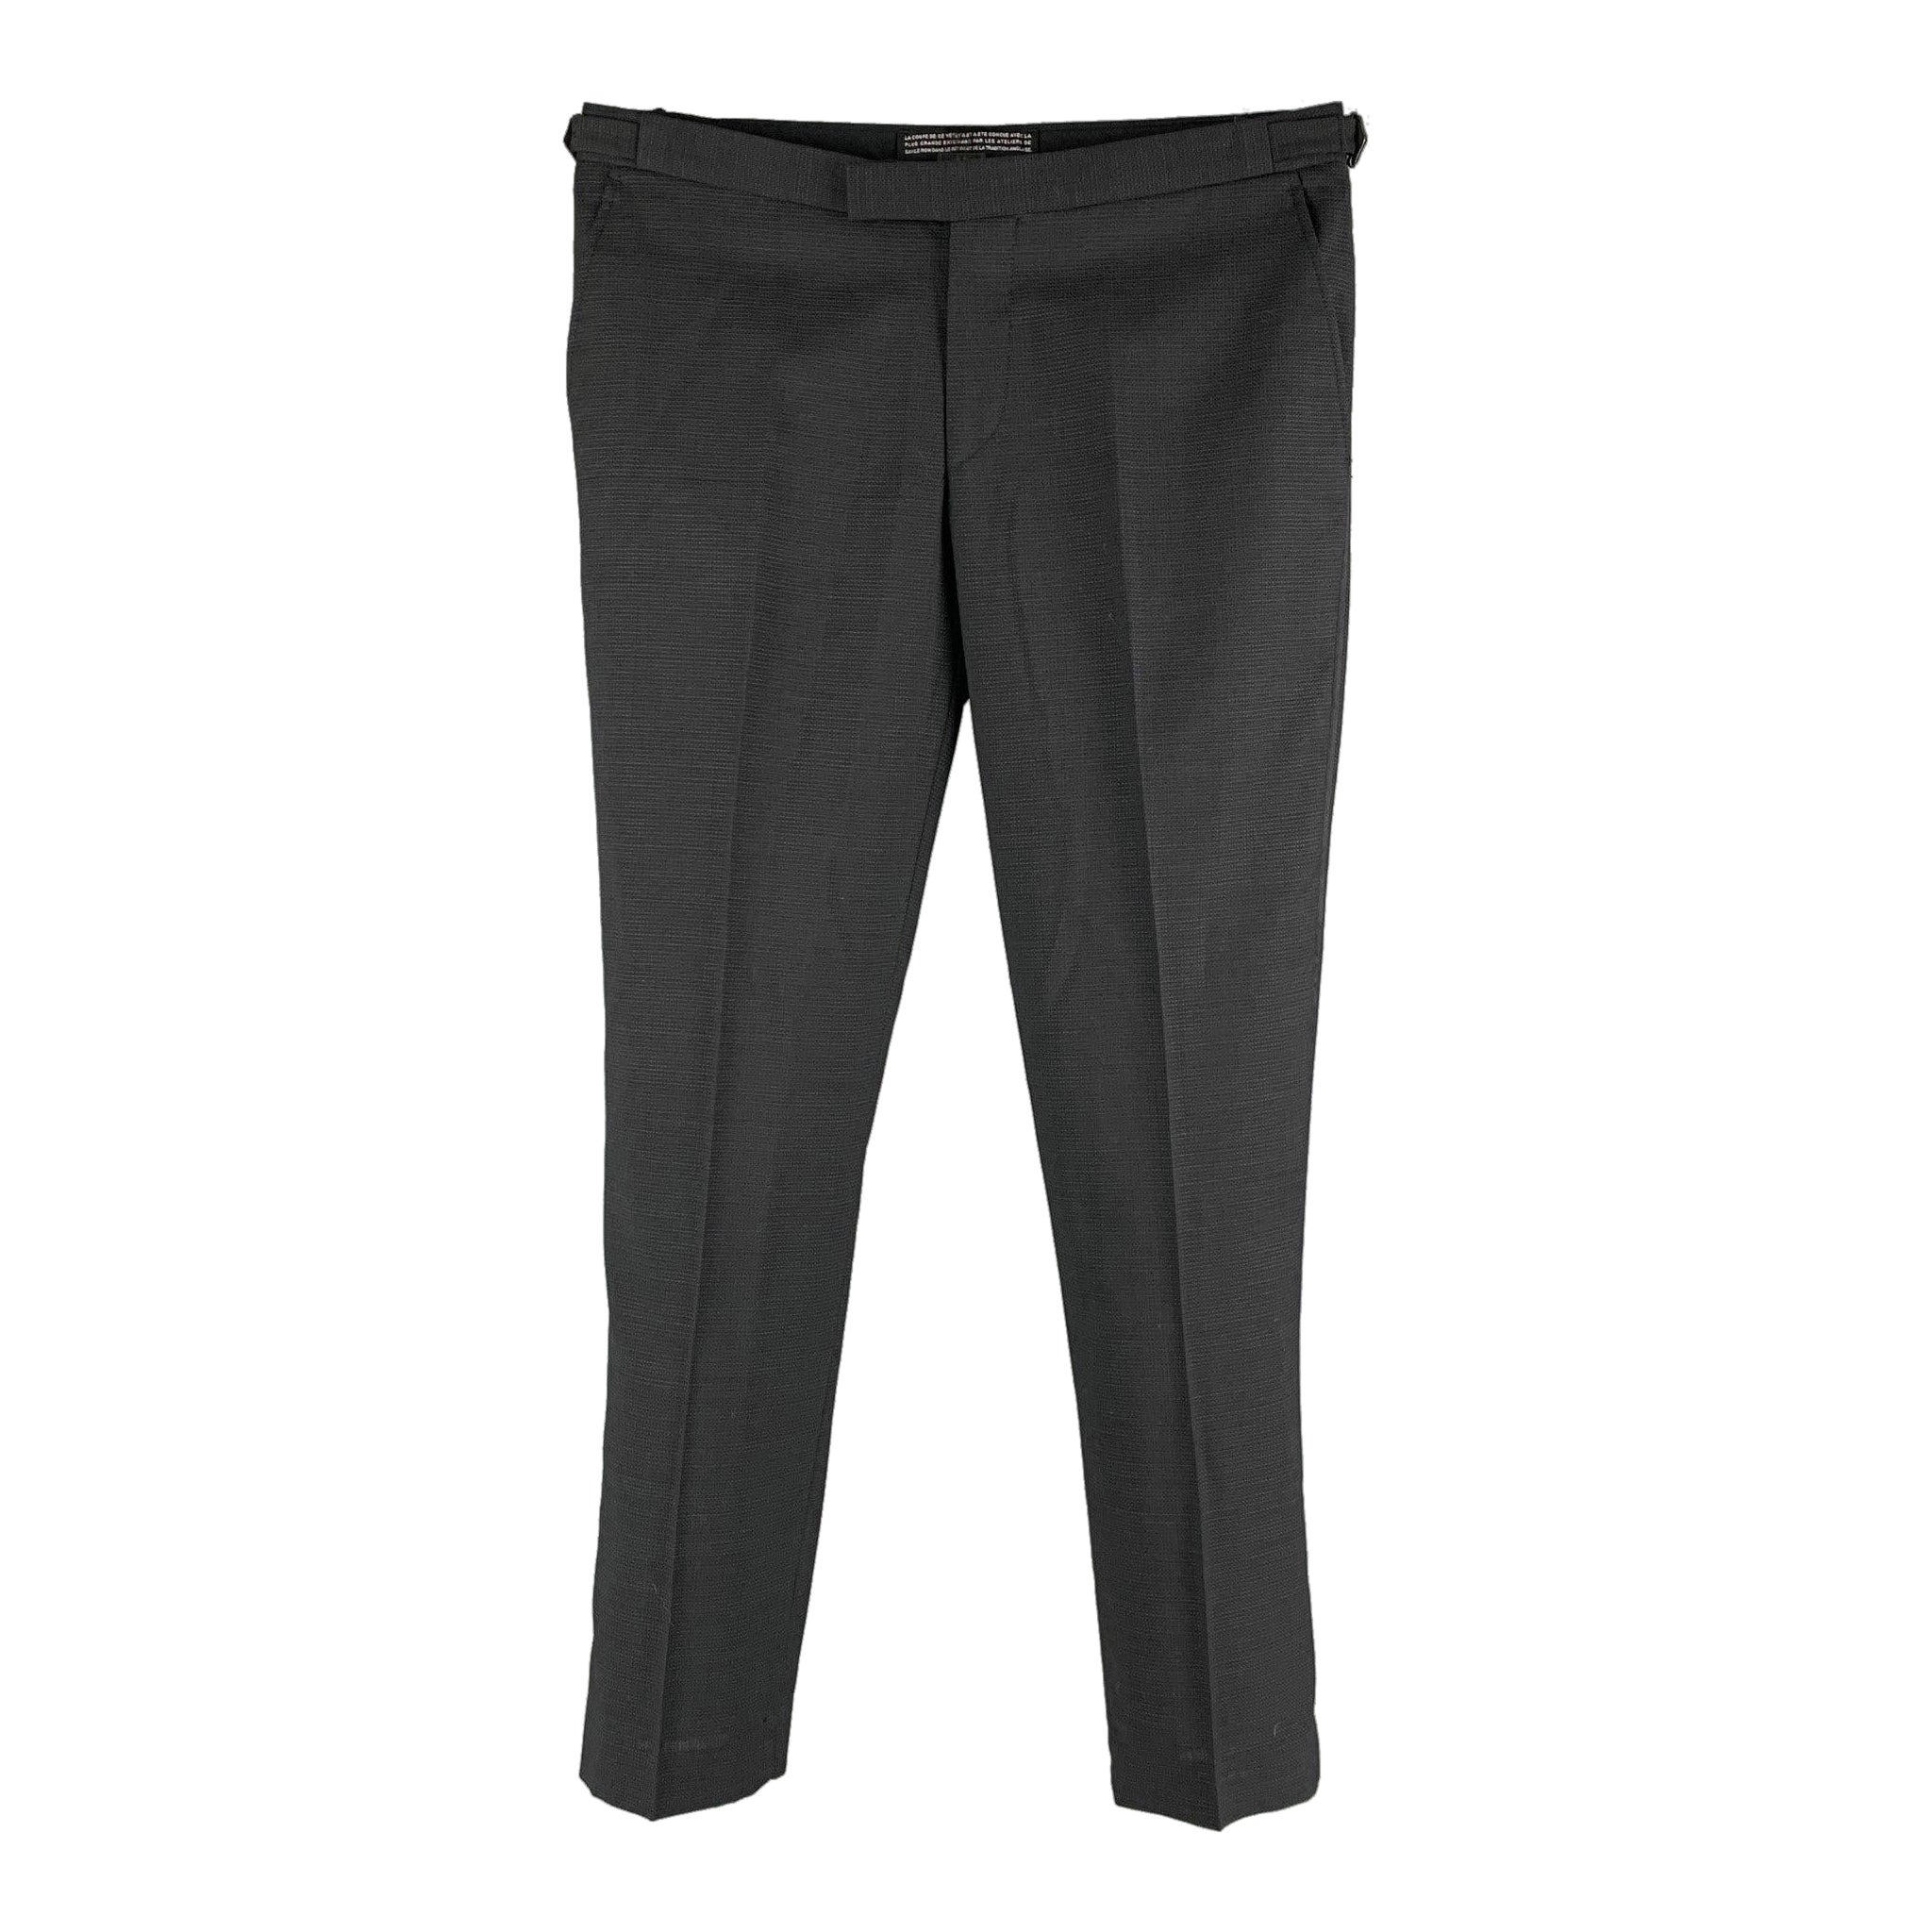 THE KOOPLES Size 30 Black Solid Wool Tuxedo Dress Pants For Sale